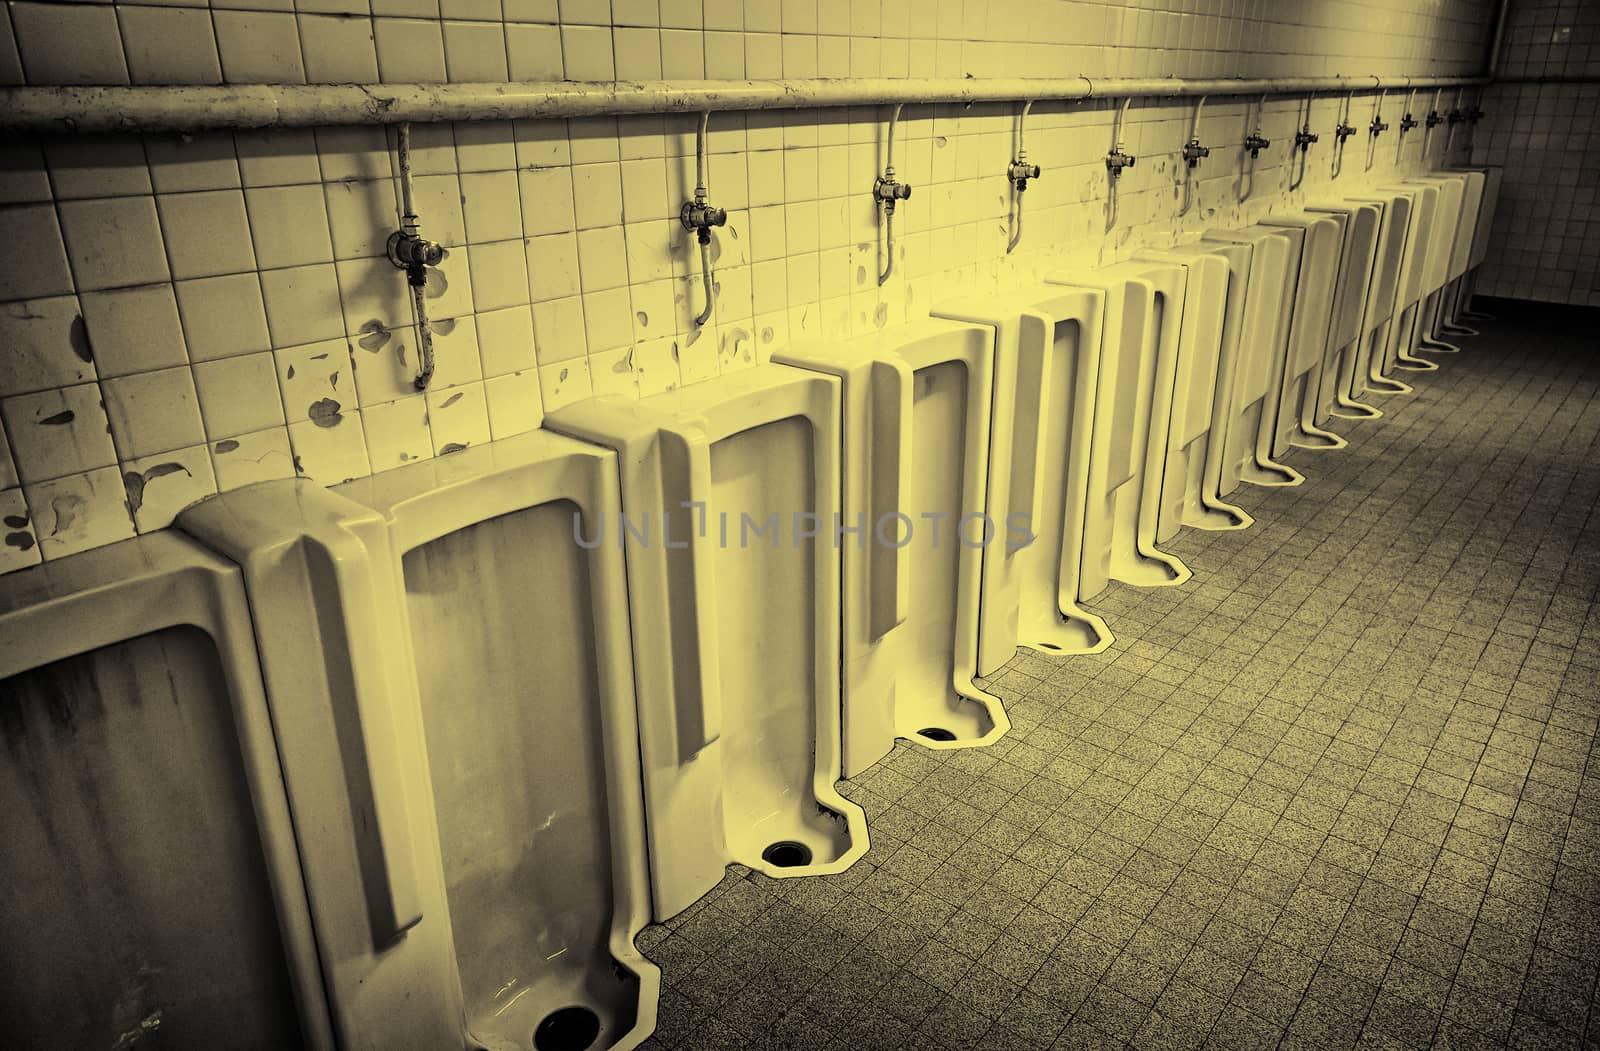 Men's public toilets, toilet for gentlemen detail, physical needs